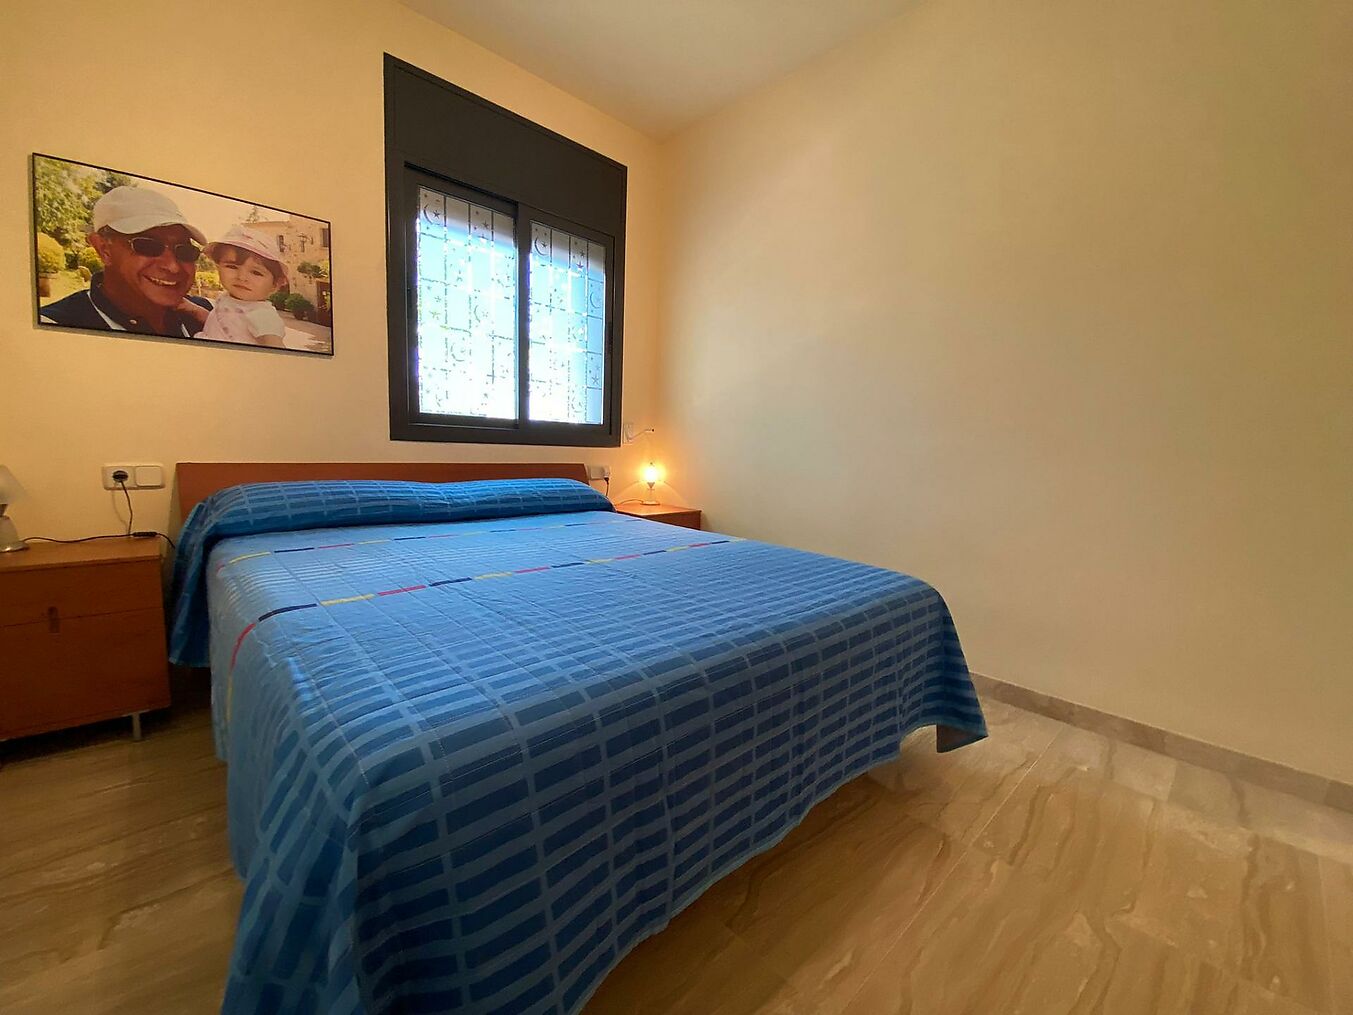 3 bedroom apartment in the port area of Platja d'Aro